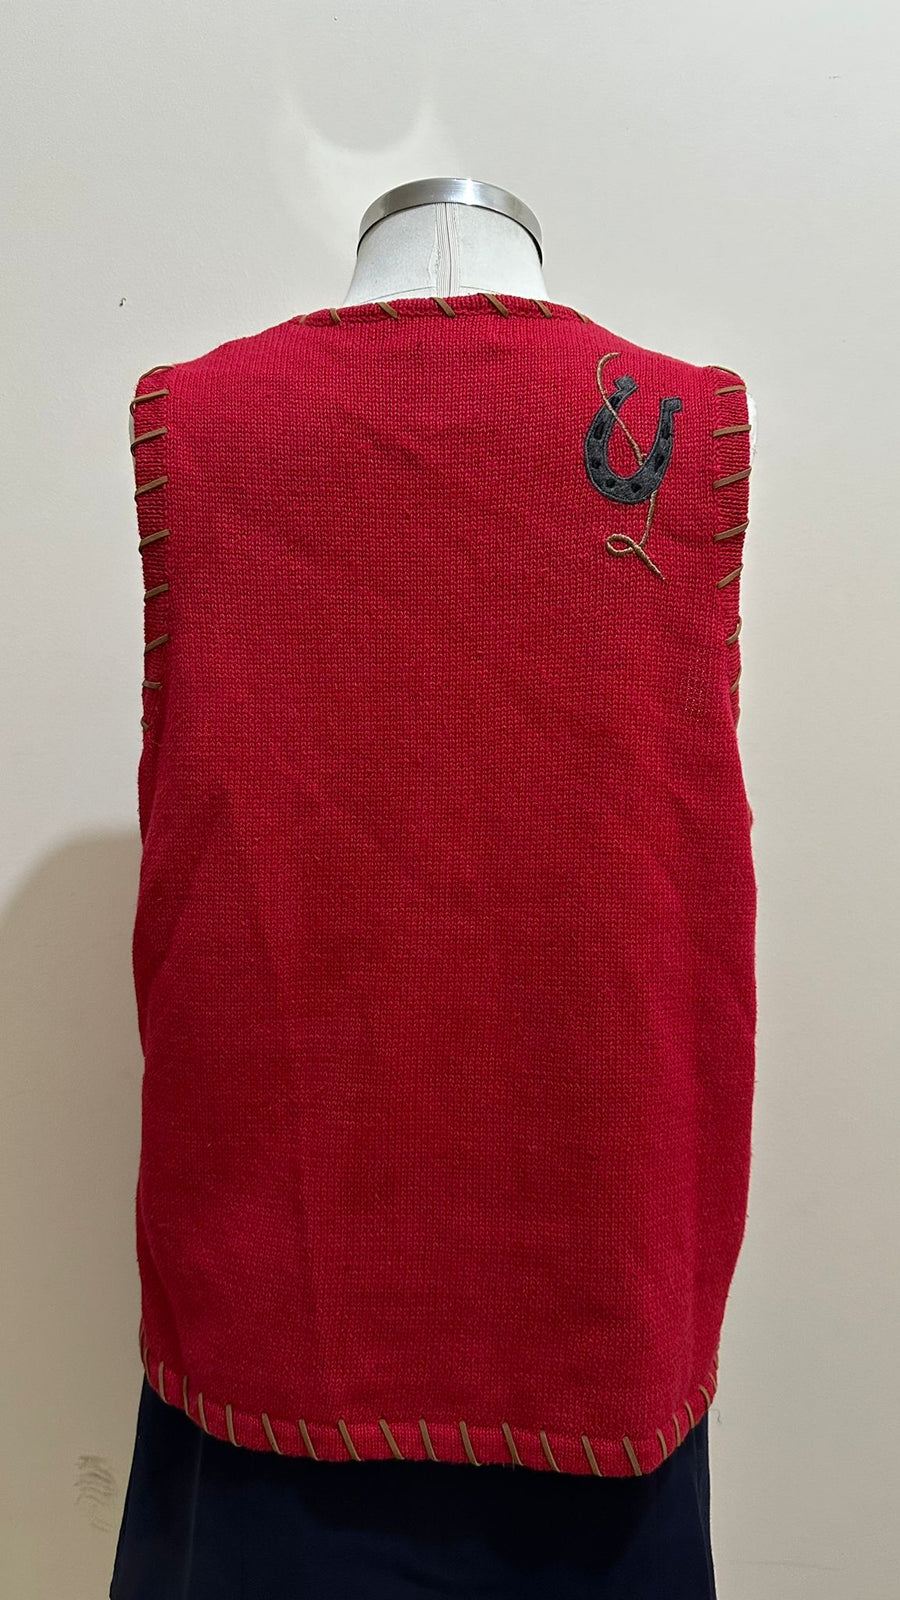 Vintage Knit Cowboy Vest